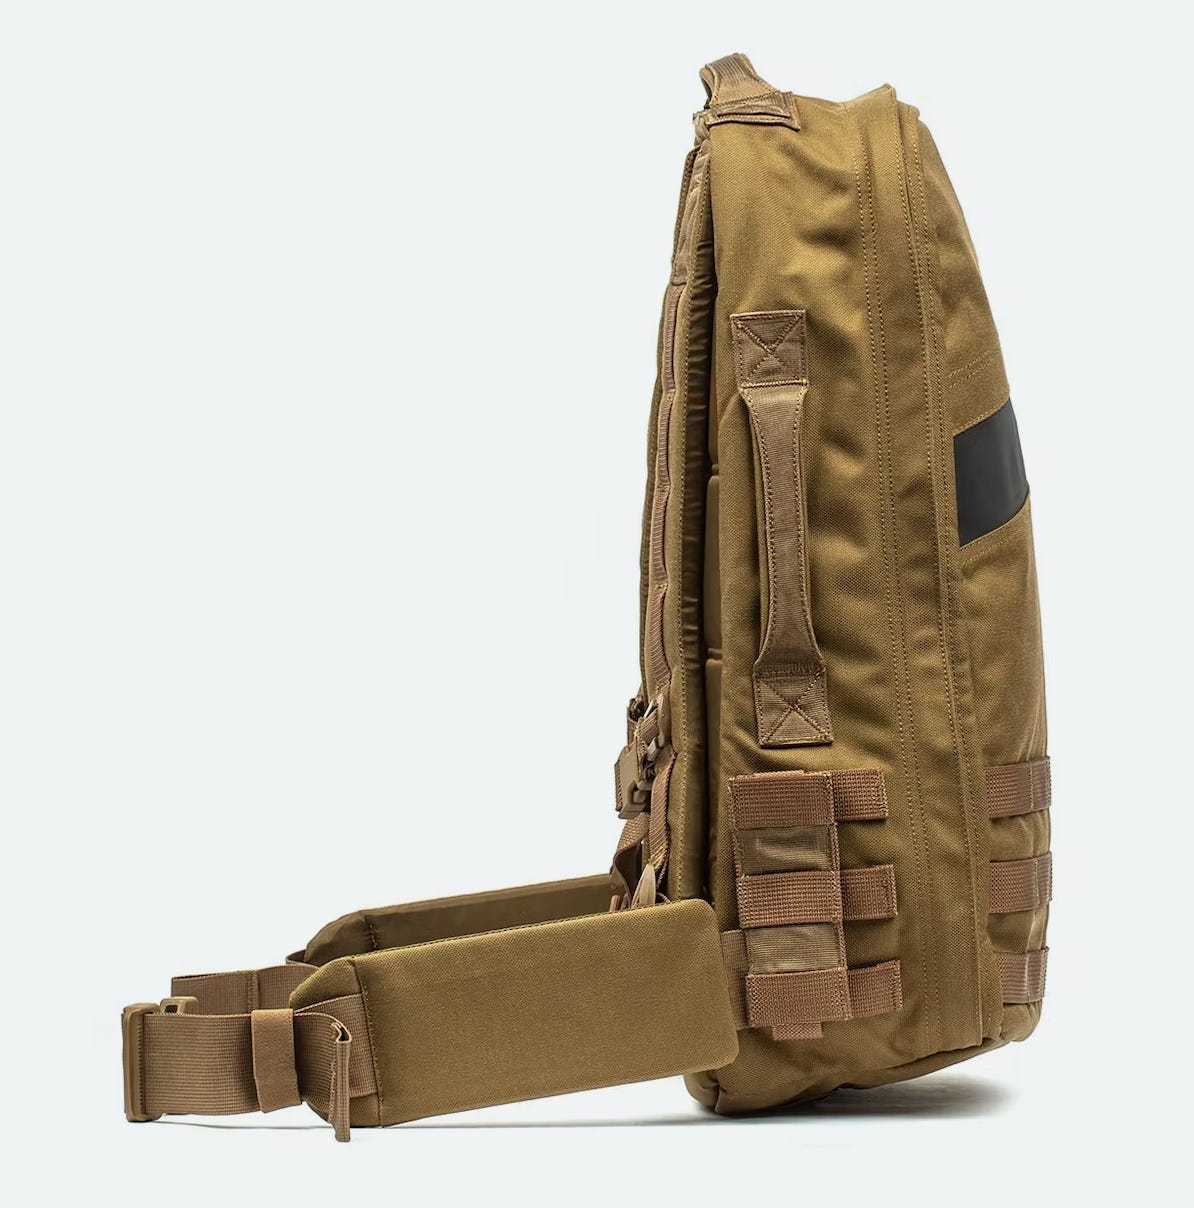 Goruck Rucker 4.0 Backpack 25l